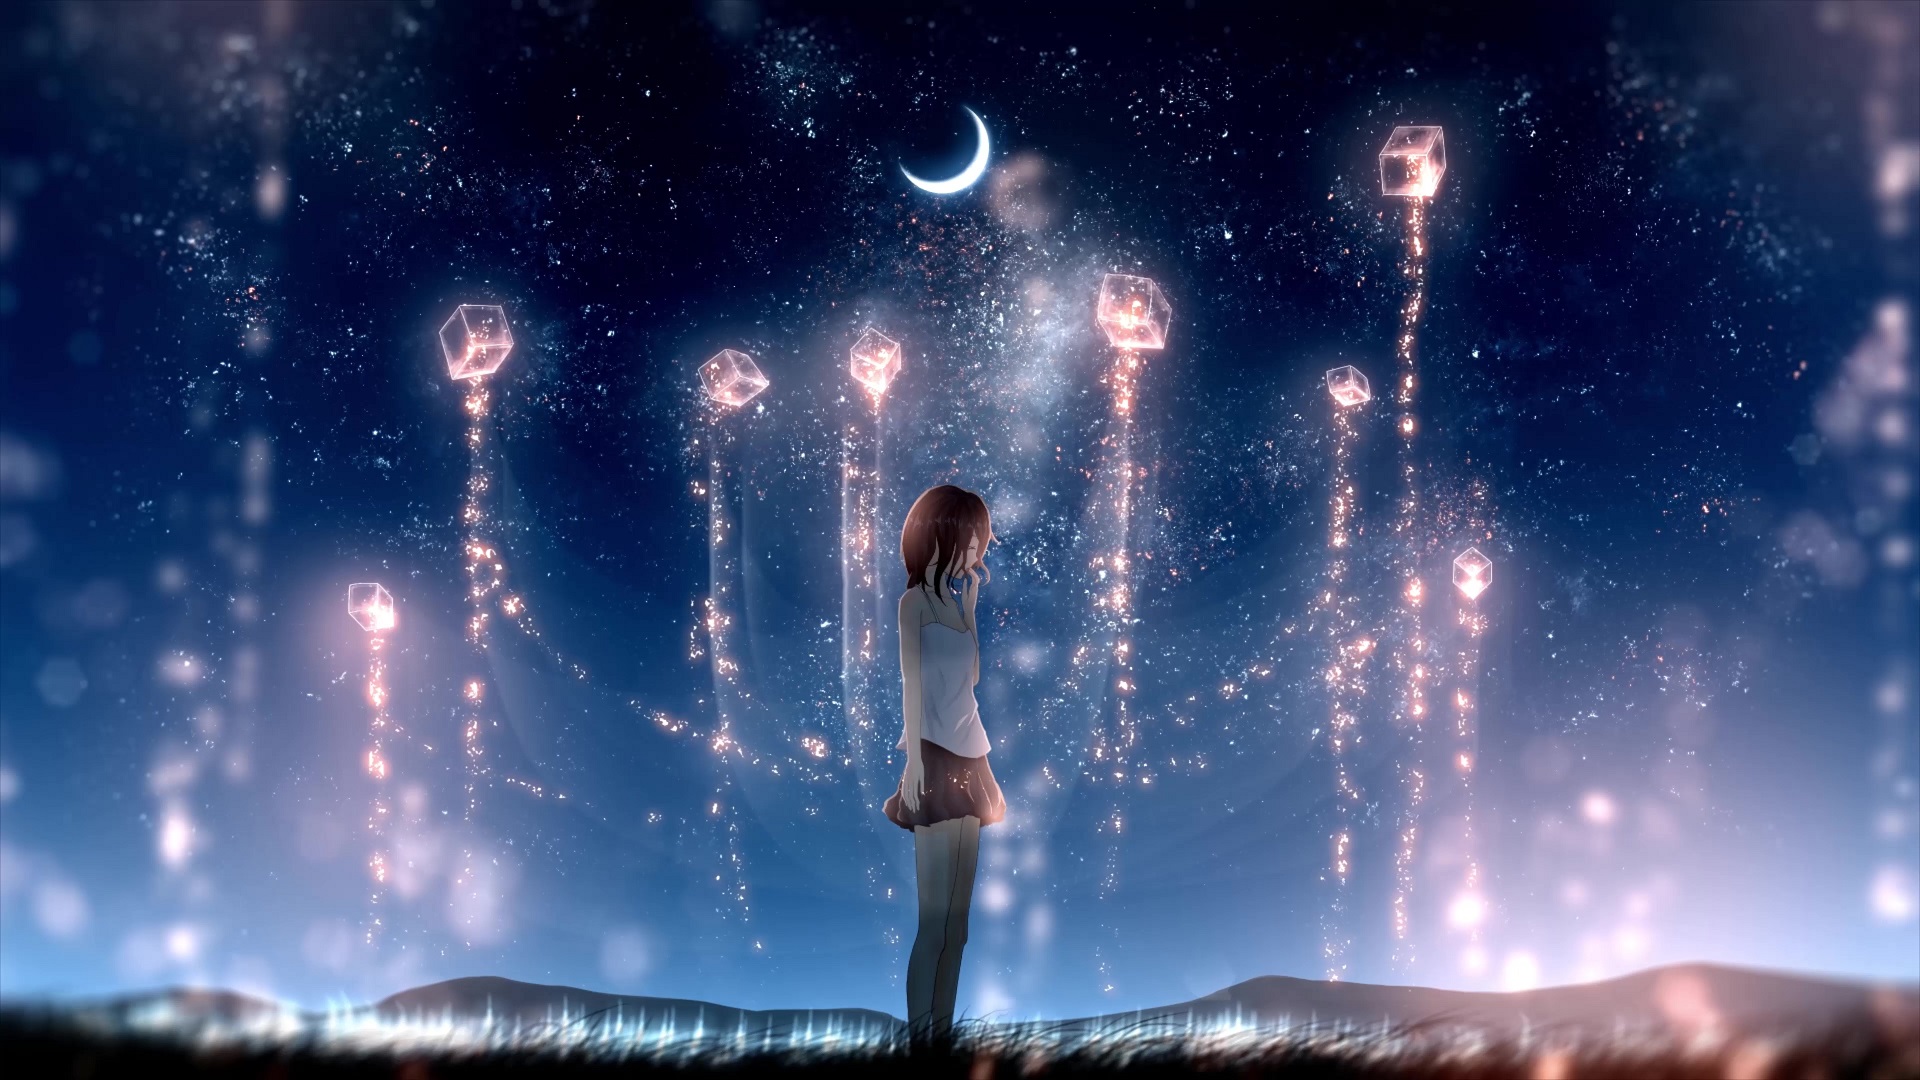 Anime Girl Standing Under The Starry Sky Live Wallpaper - MoeWalls